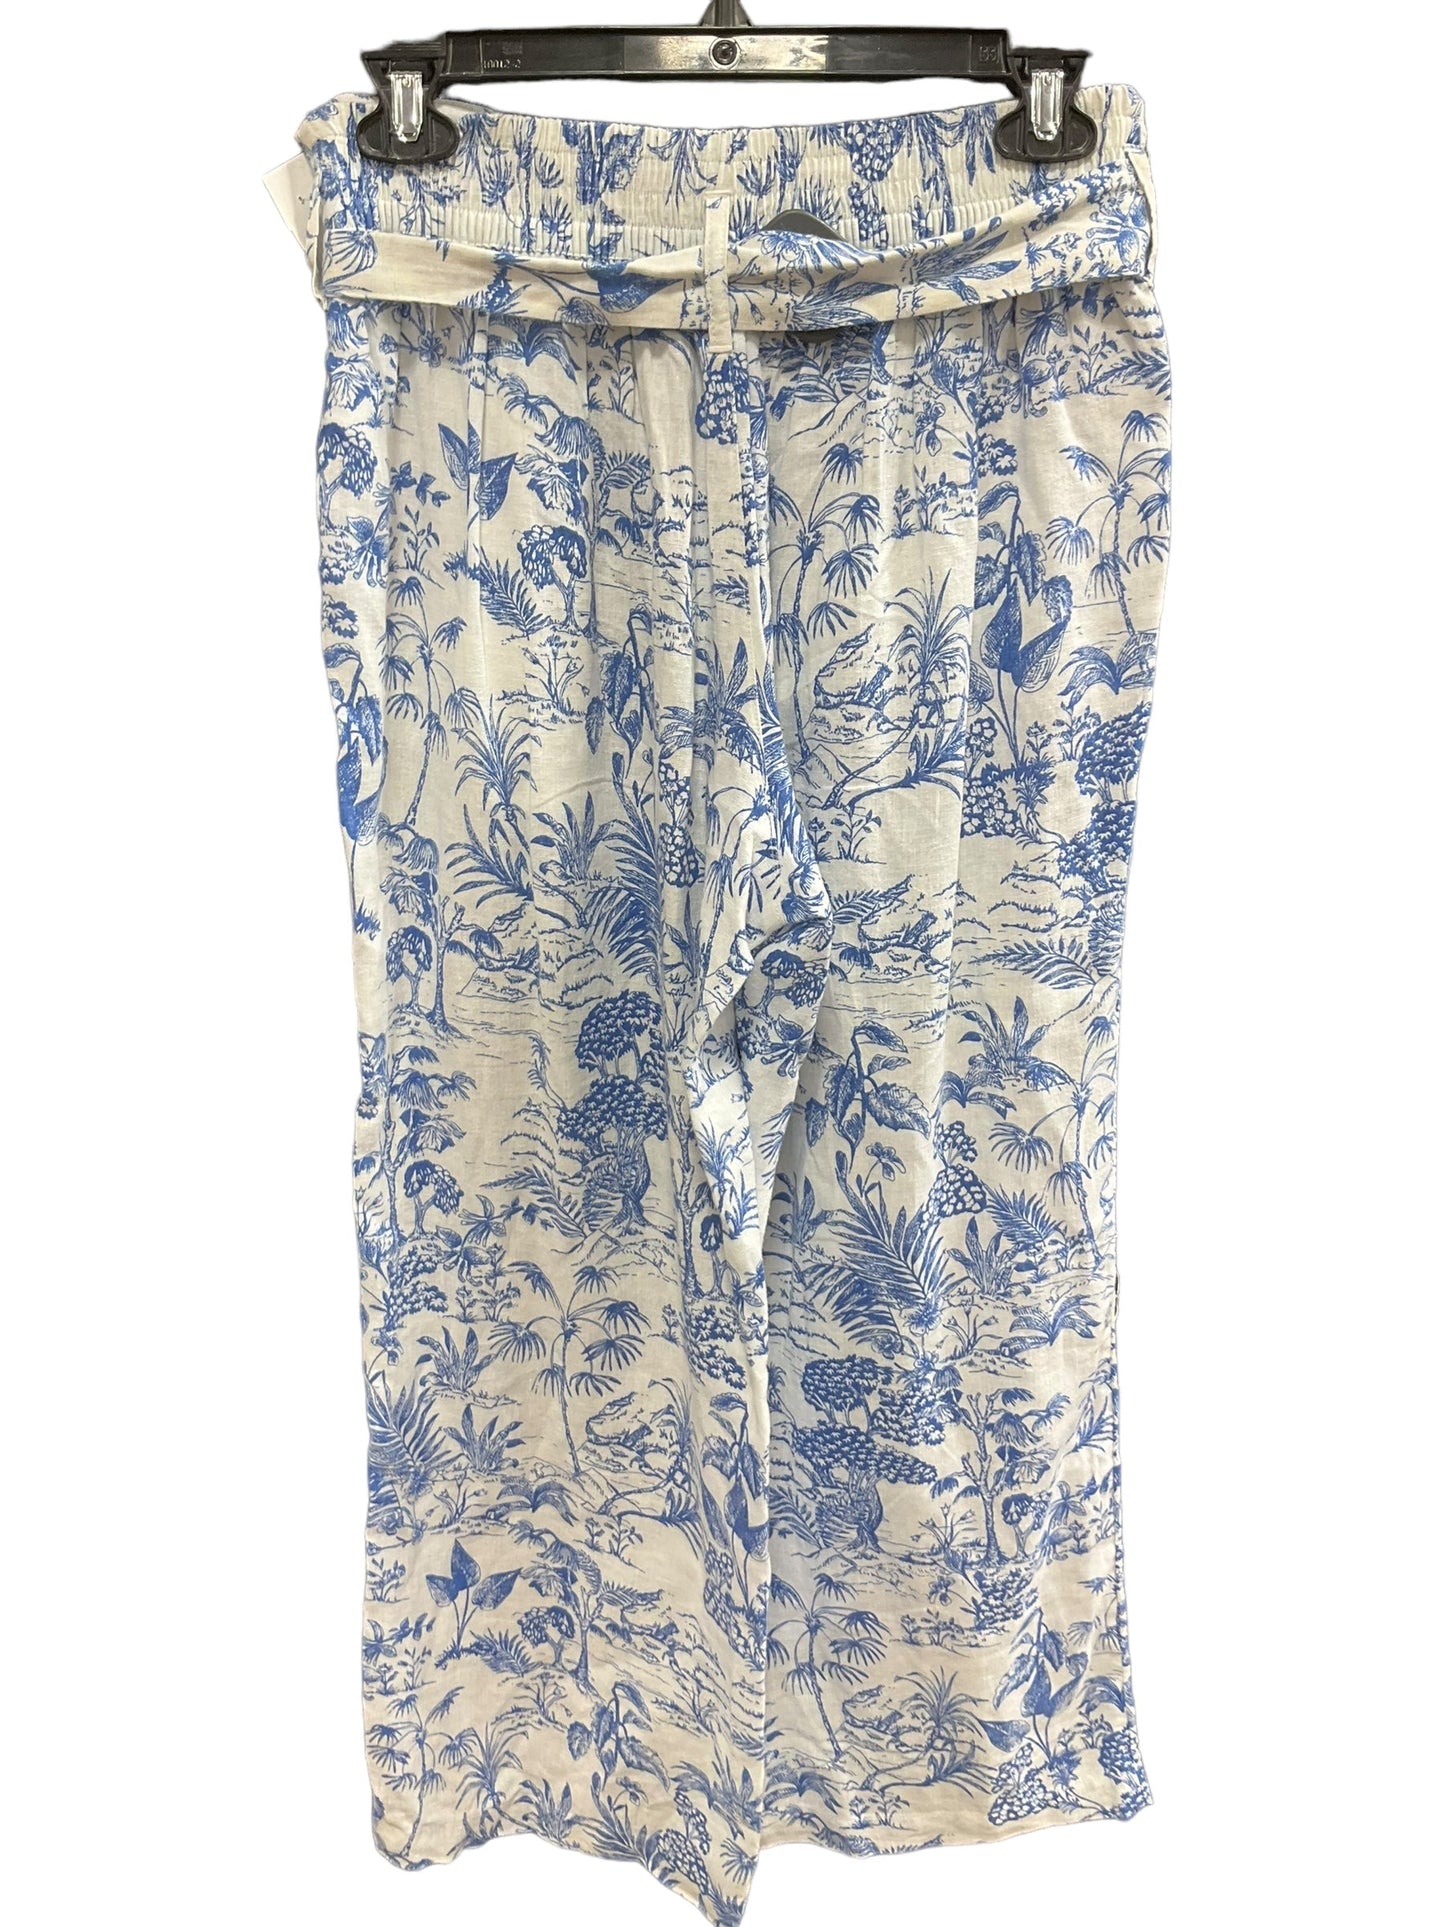 Blue & White Pants Dress Nicole Miller, Size S